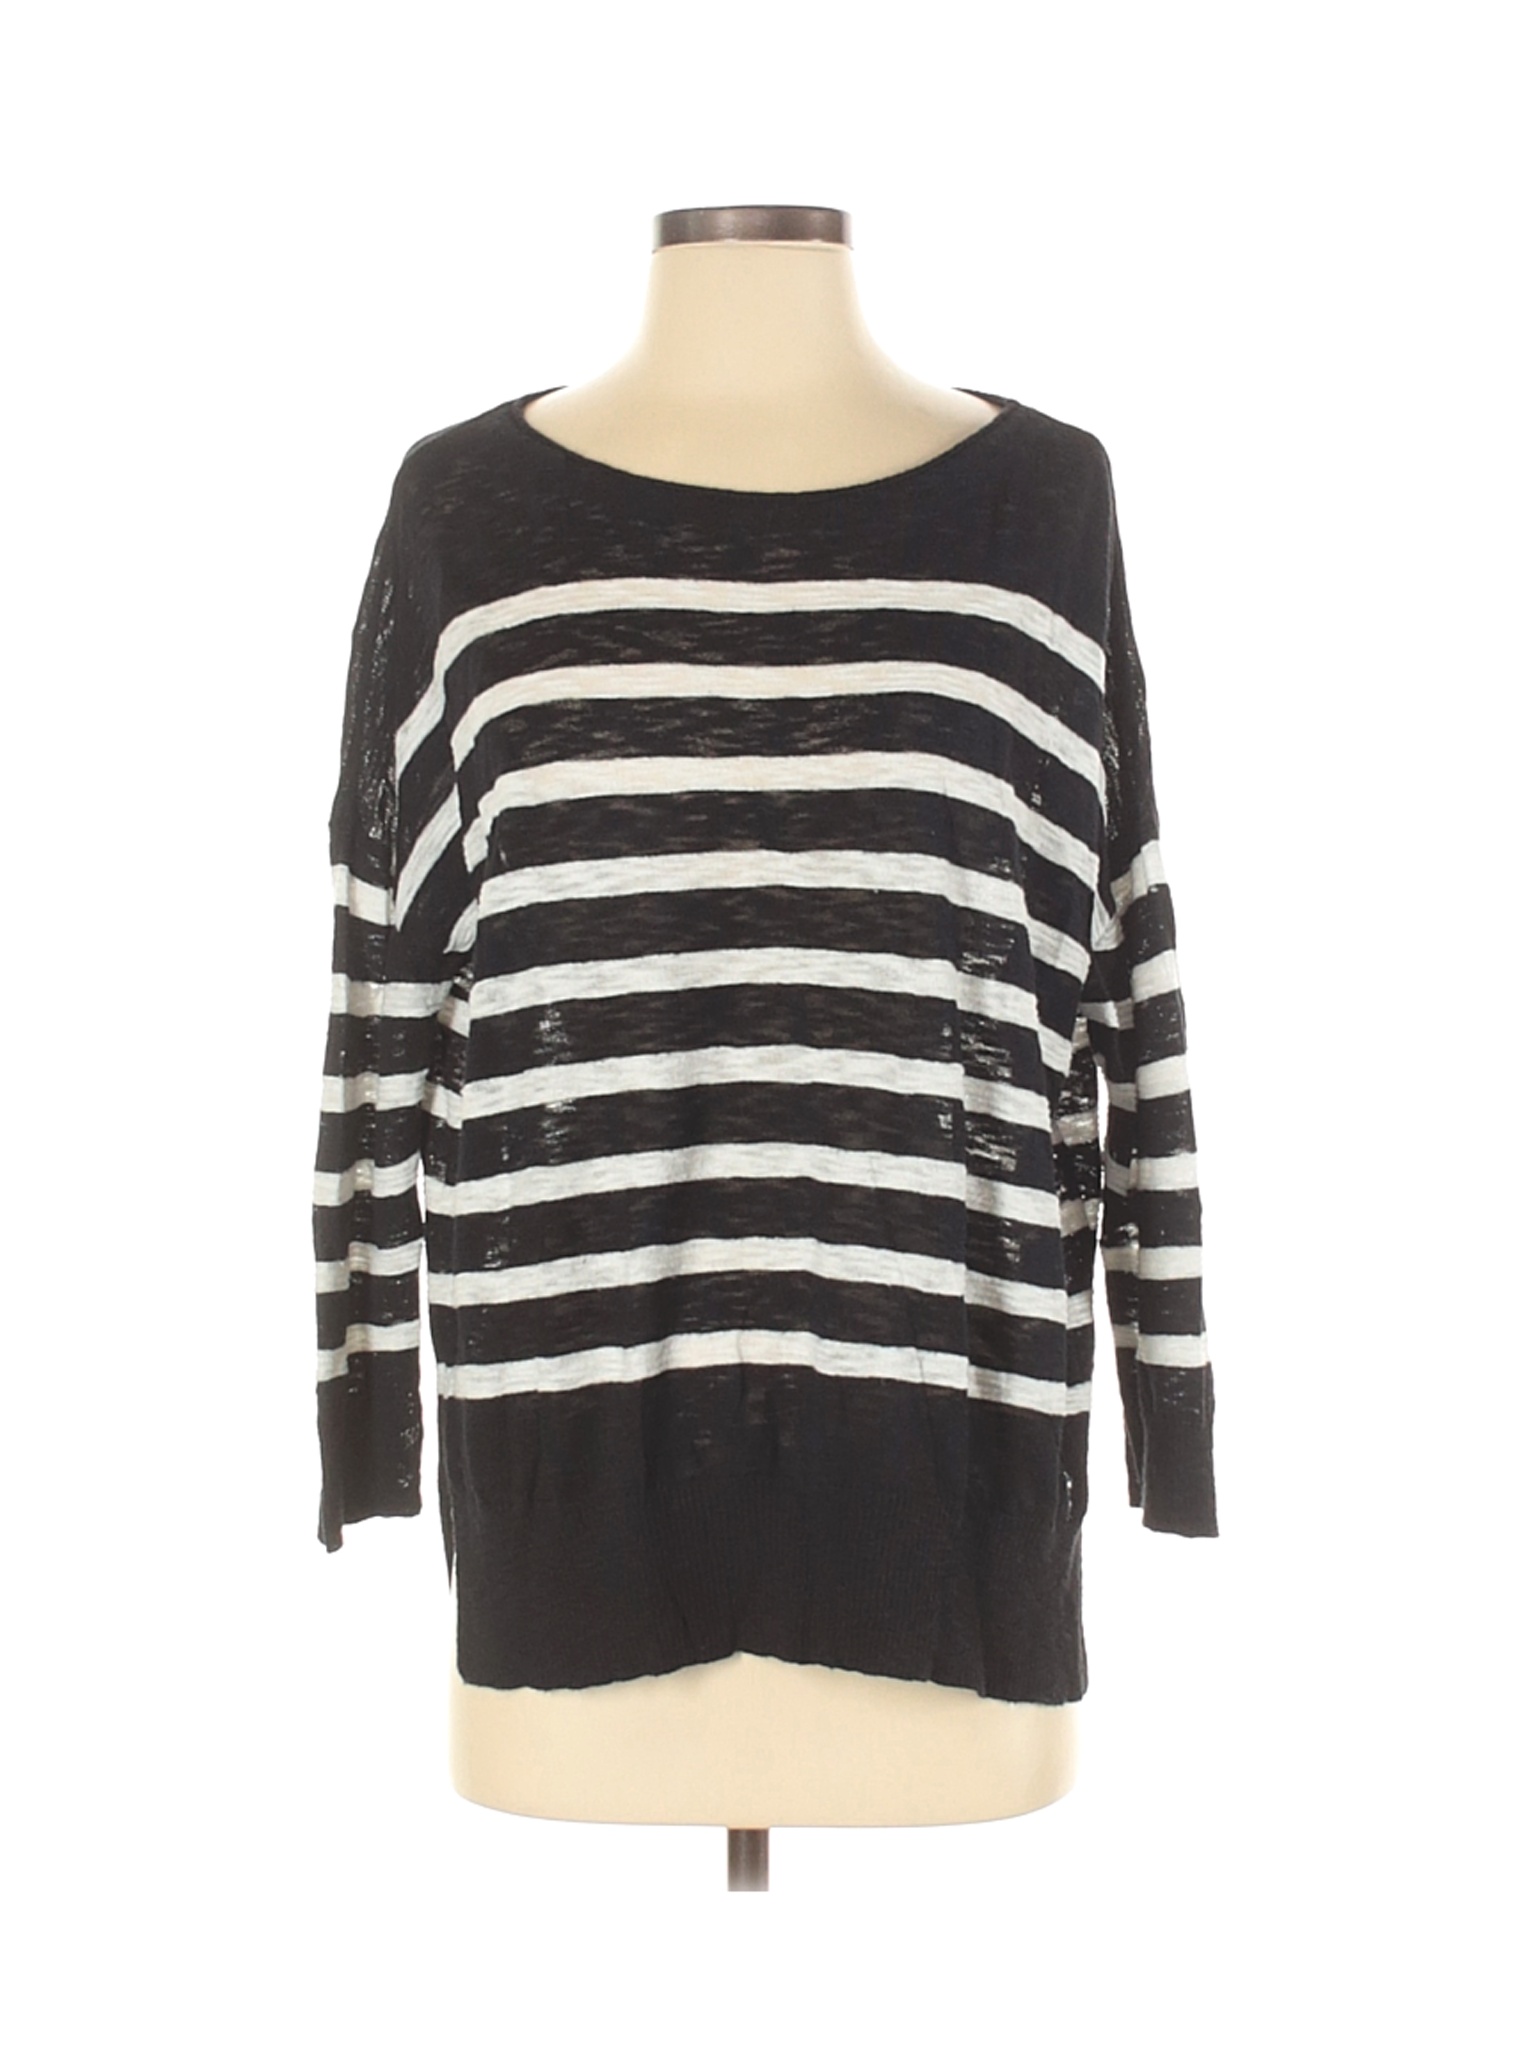 Zara Women Black Pullover Sweater S | eBay